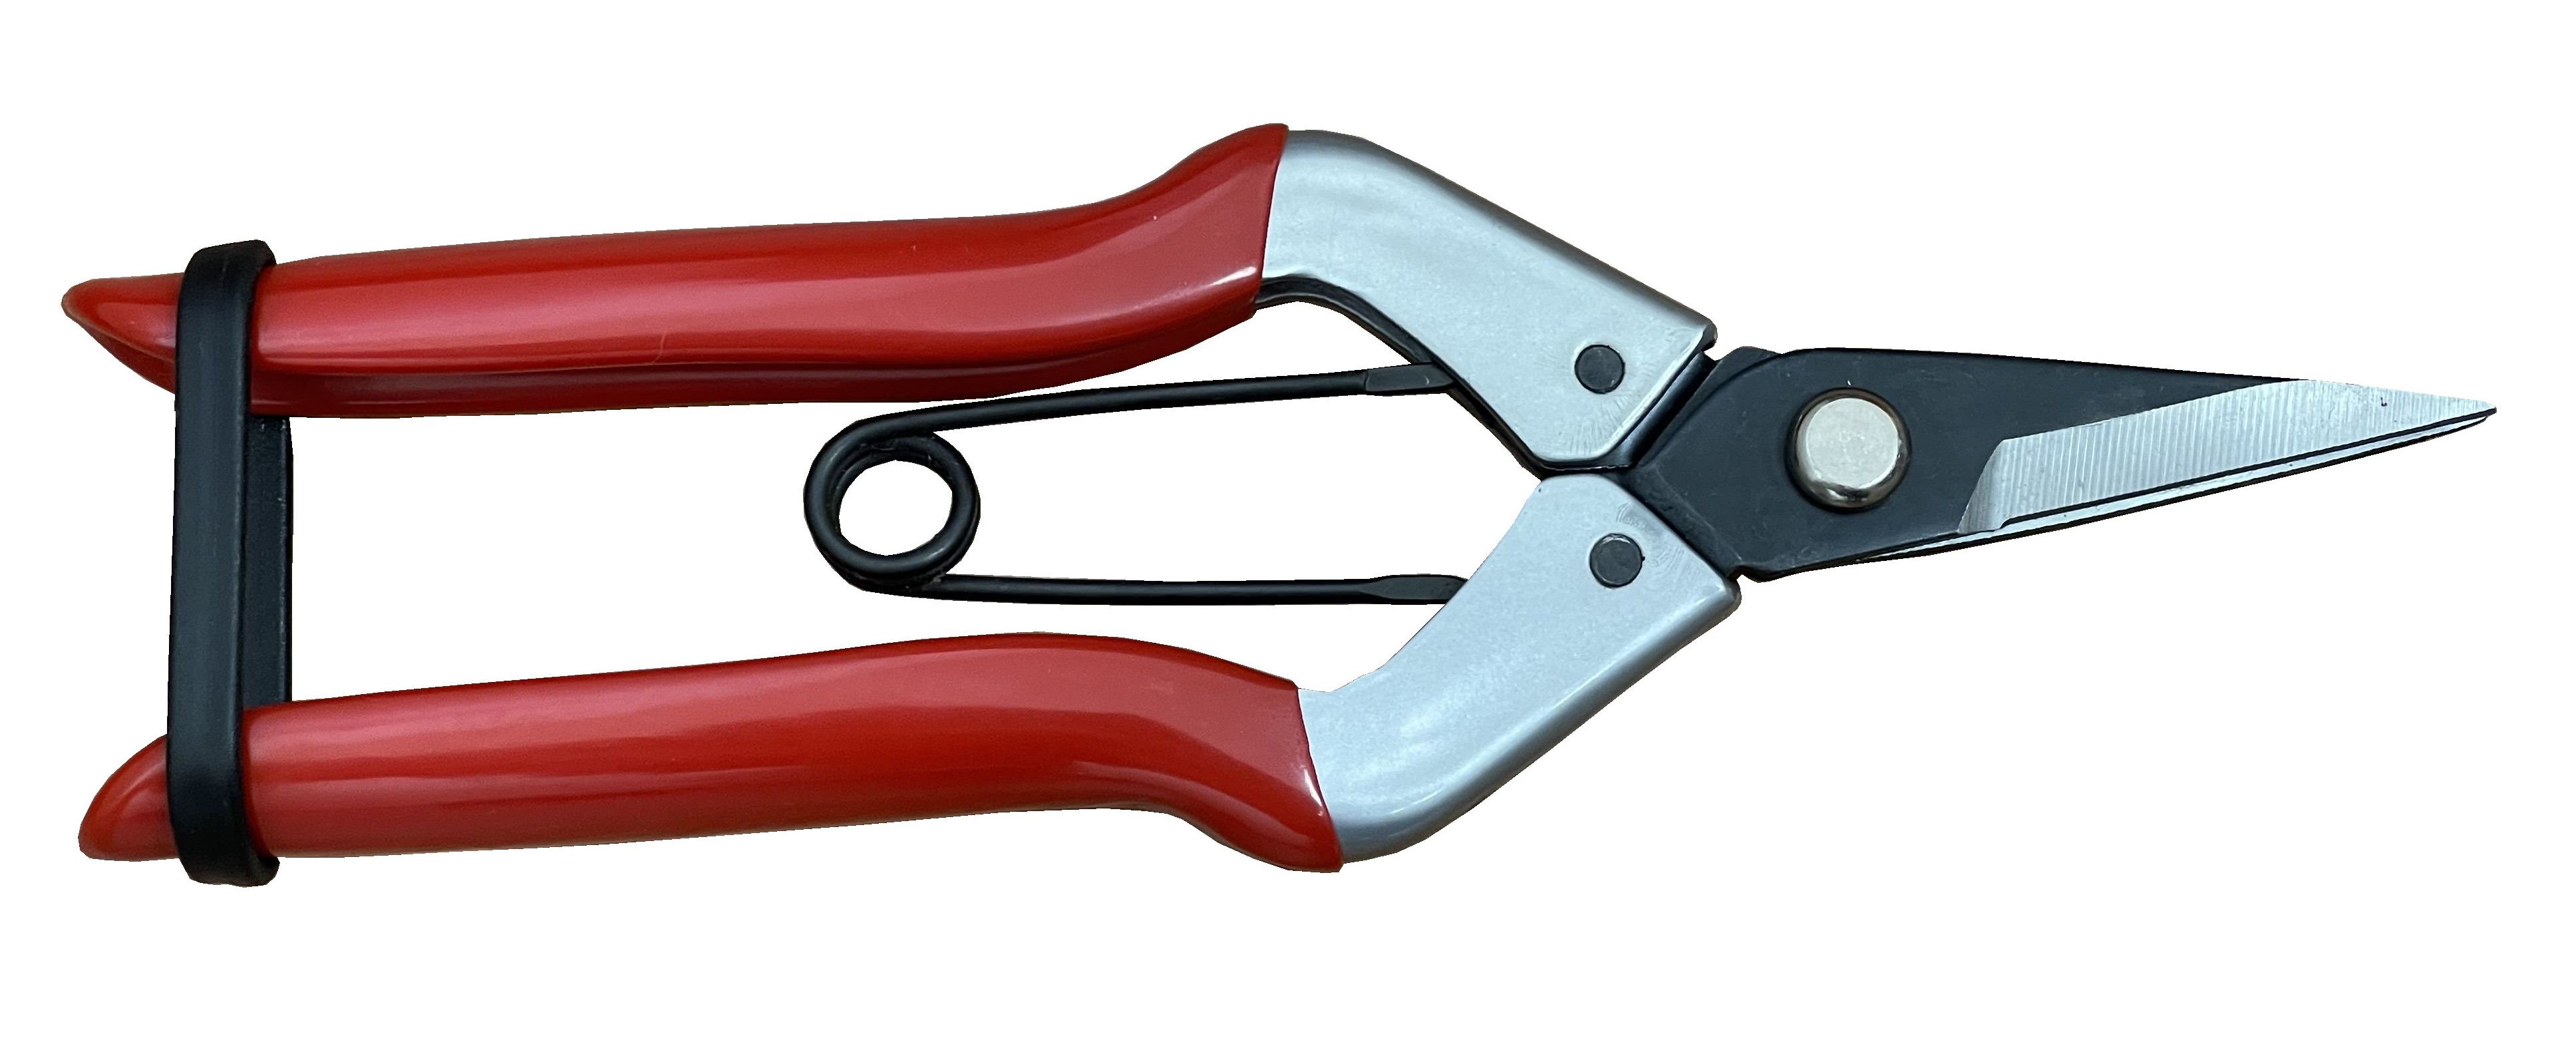 167mm Curved Fruit Scissors